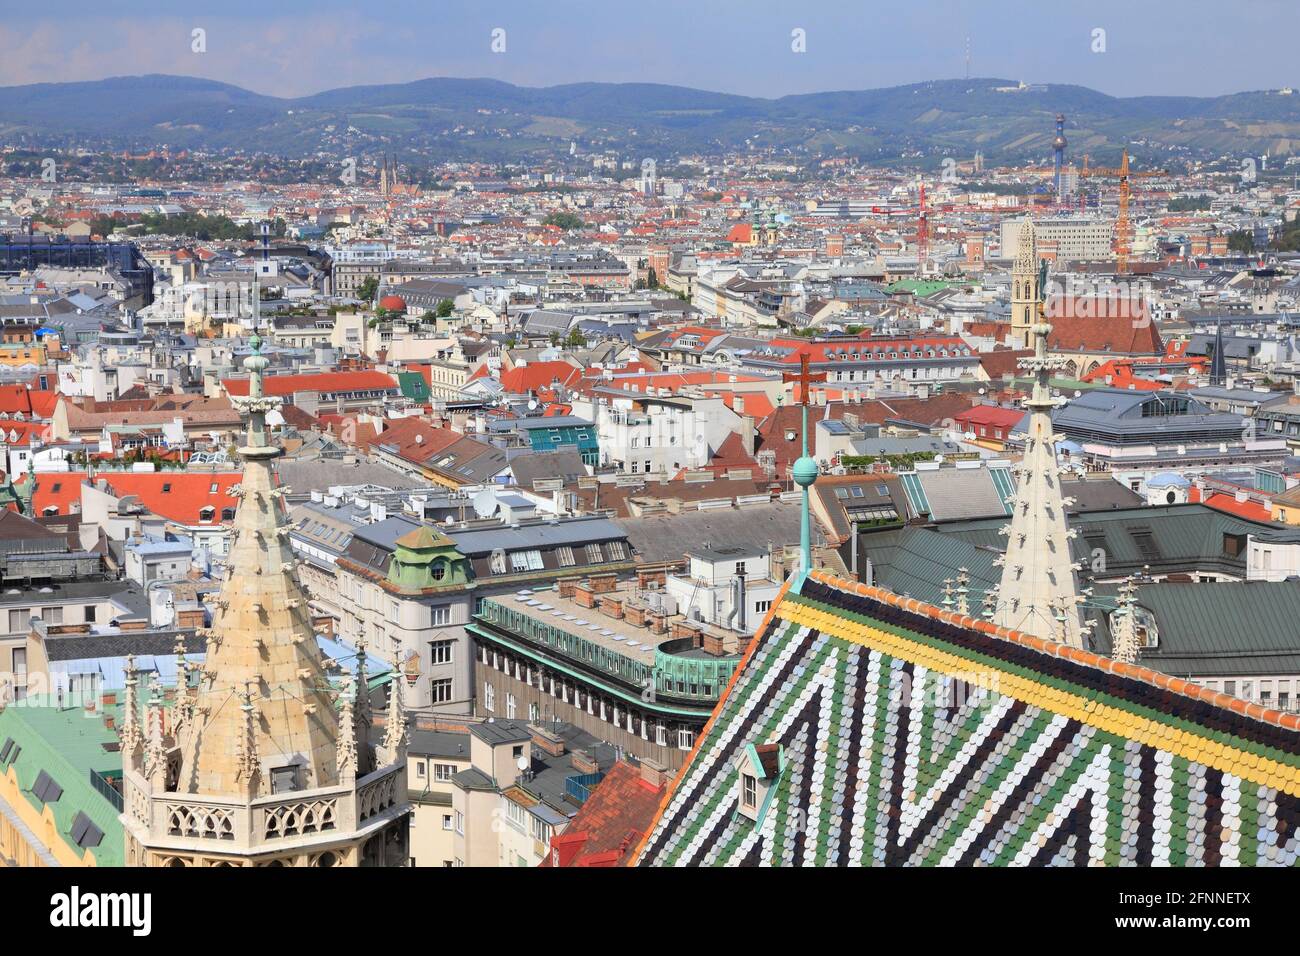 https://c8.alamy.com/comp/2FNNETX/vienna-old-town-in-austria-aerial-view-cityscape-2FNNETX.jpg